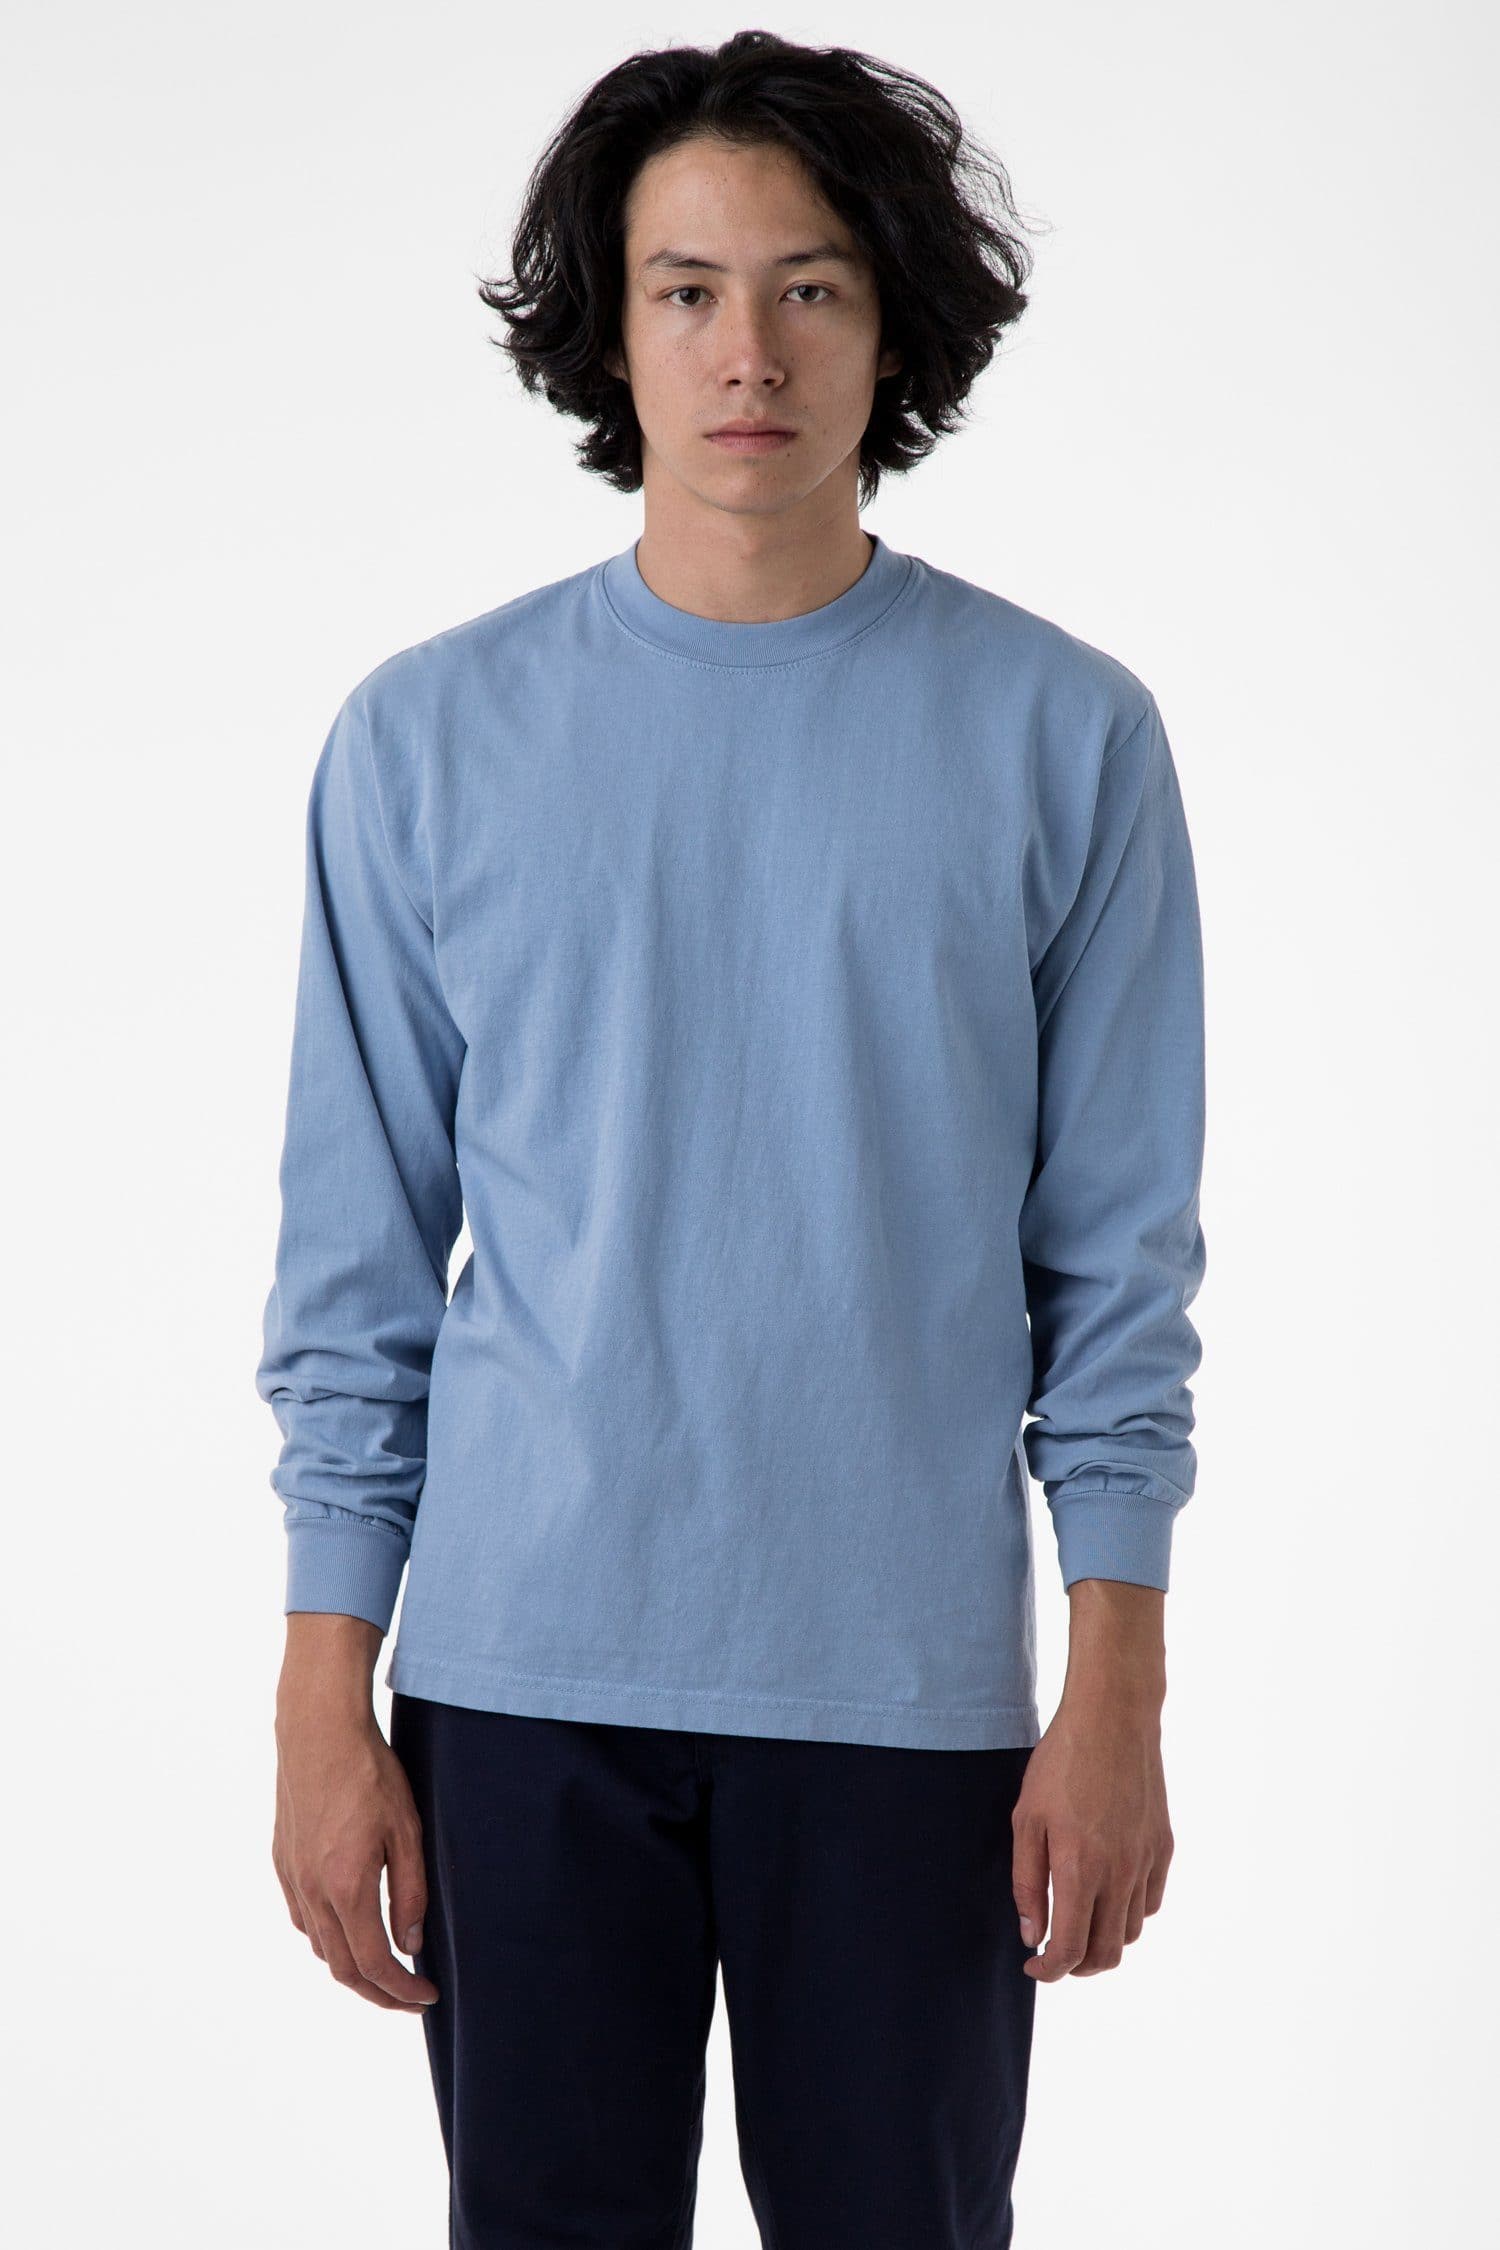 Angeles Crew Dye -1807GD – Neck Los - Garment Sky Sleeve Long 6.5oz Apparel Sportswear